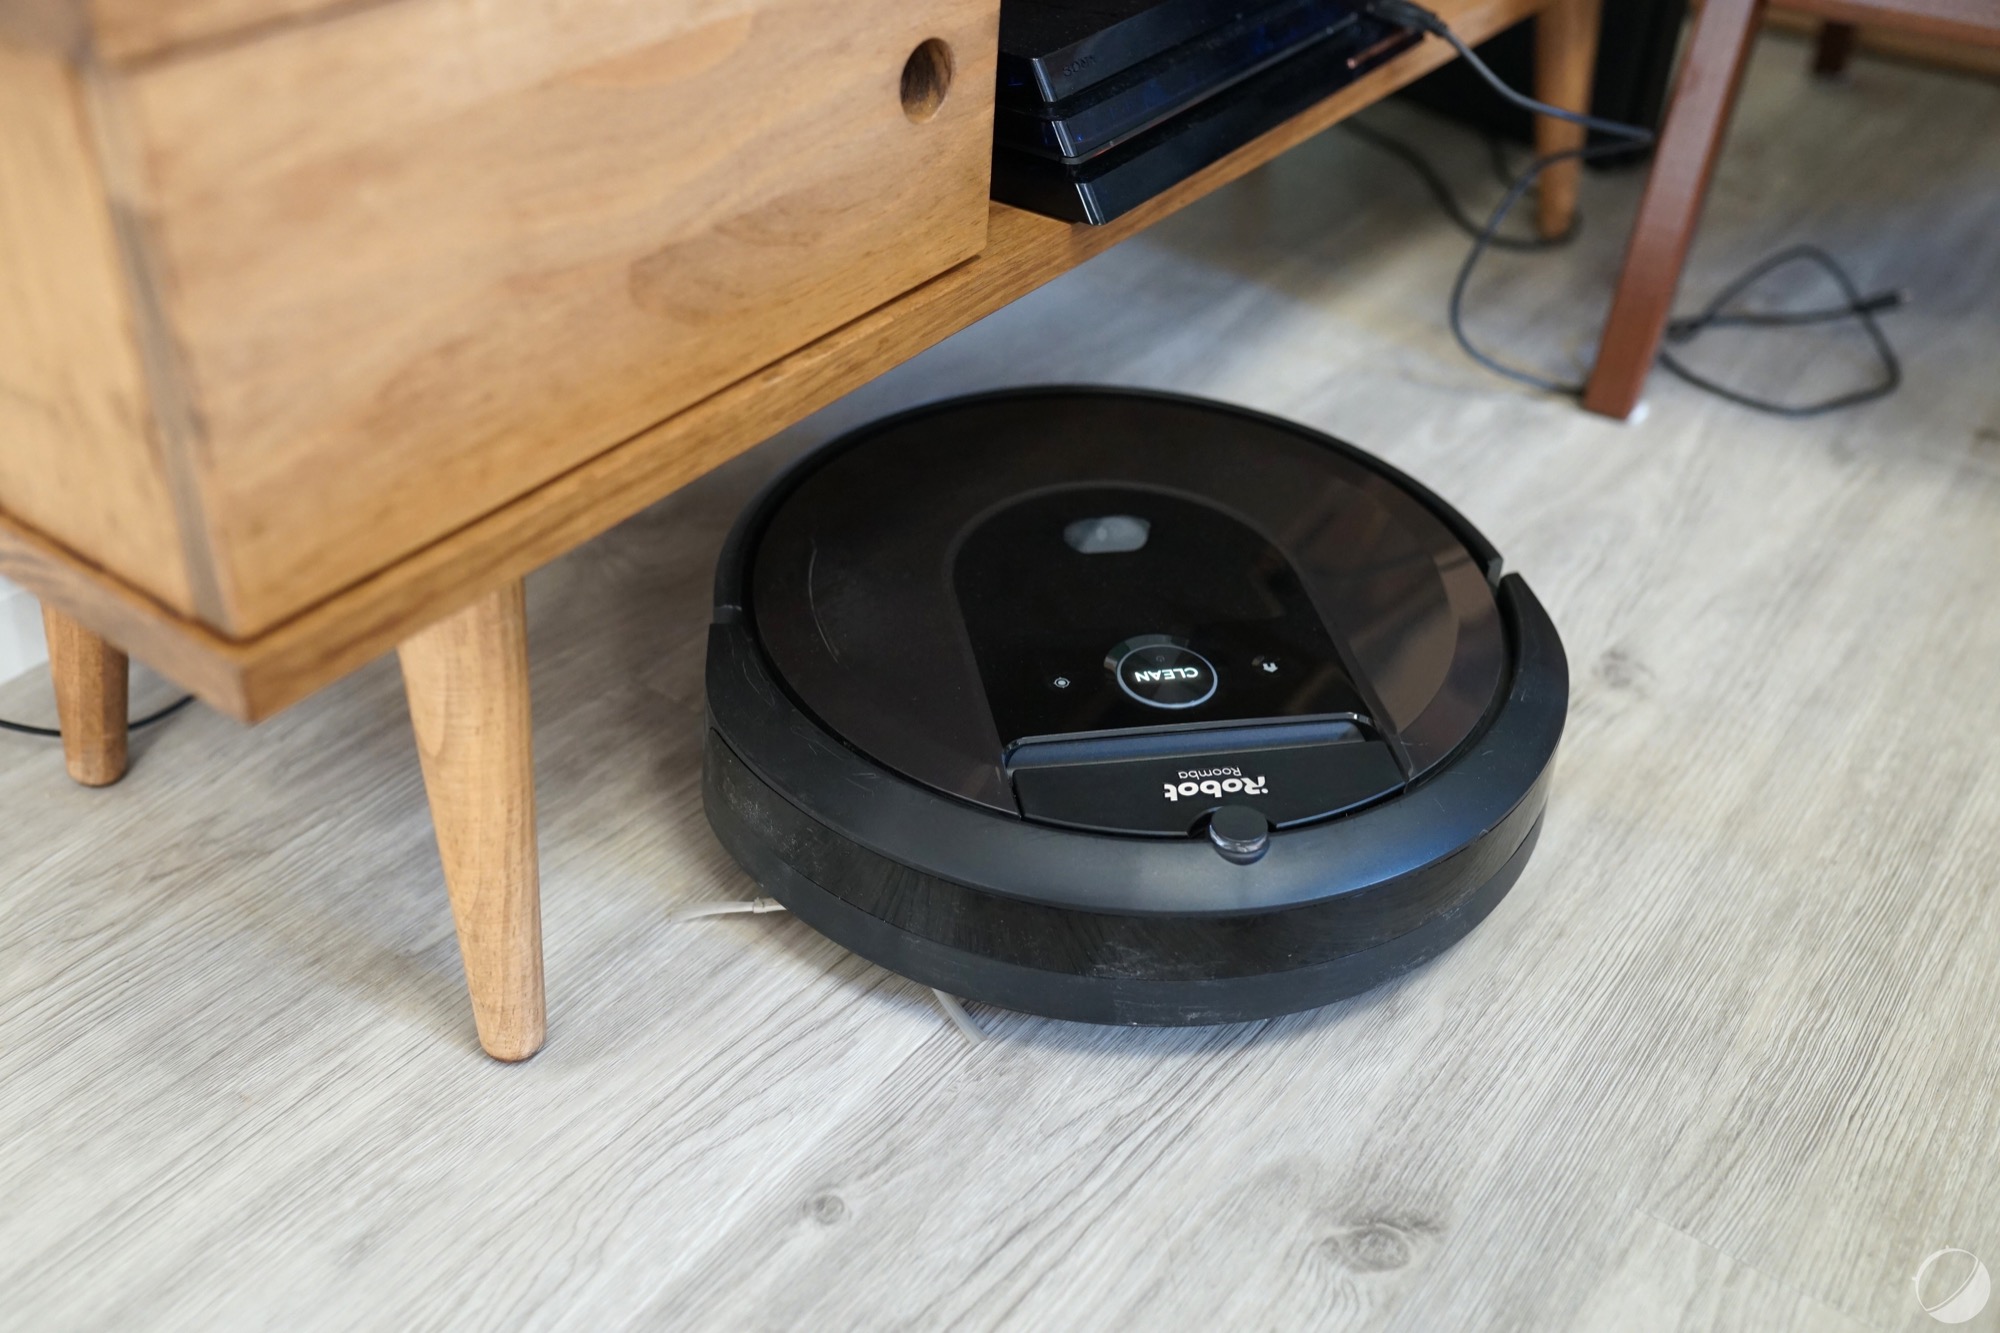 Test iRobot Roomba i3+ : notre avis complet - Aspirateur Robot - Frandroid